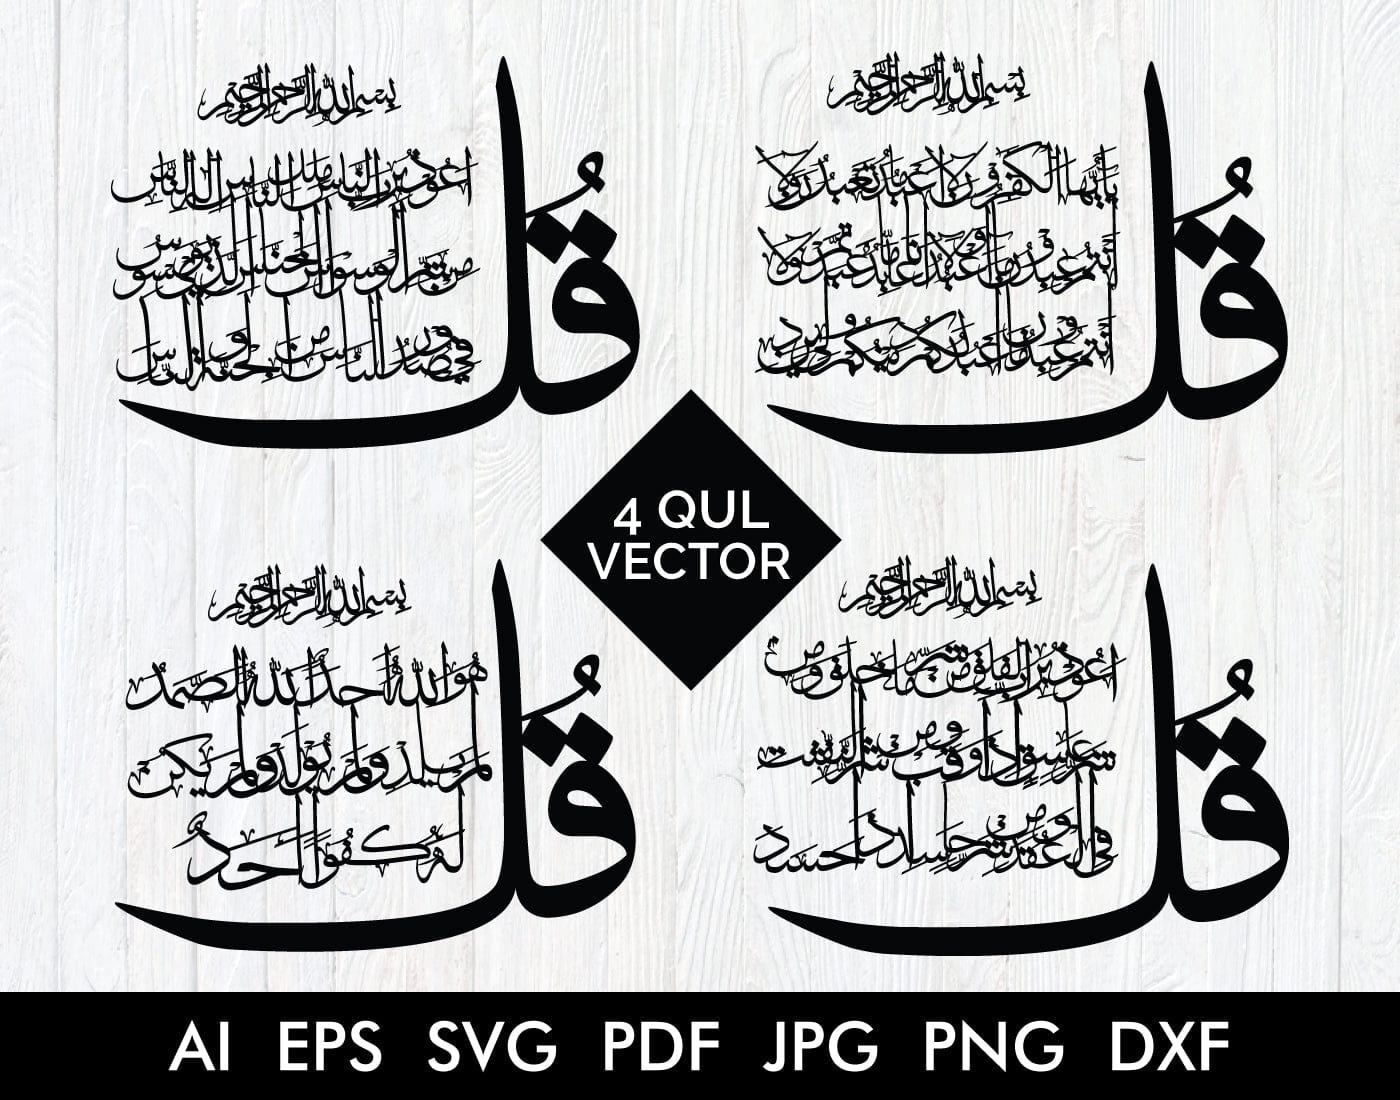 The 4 Quls Arabic Calligraphy Vector - islamicwalldecors